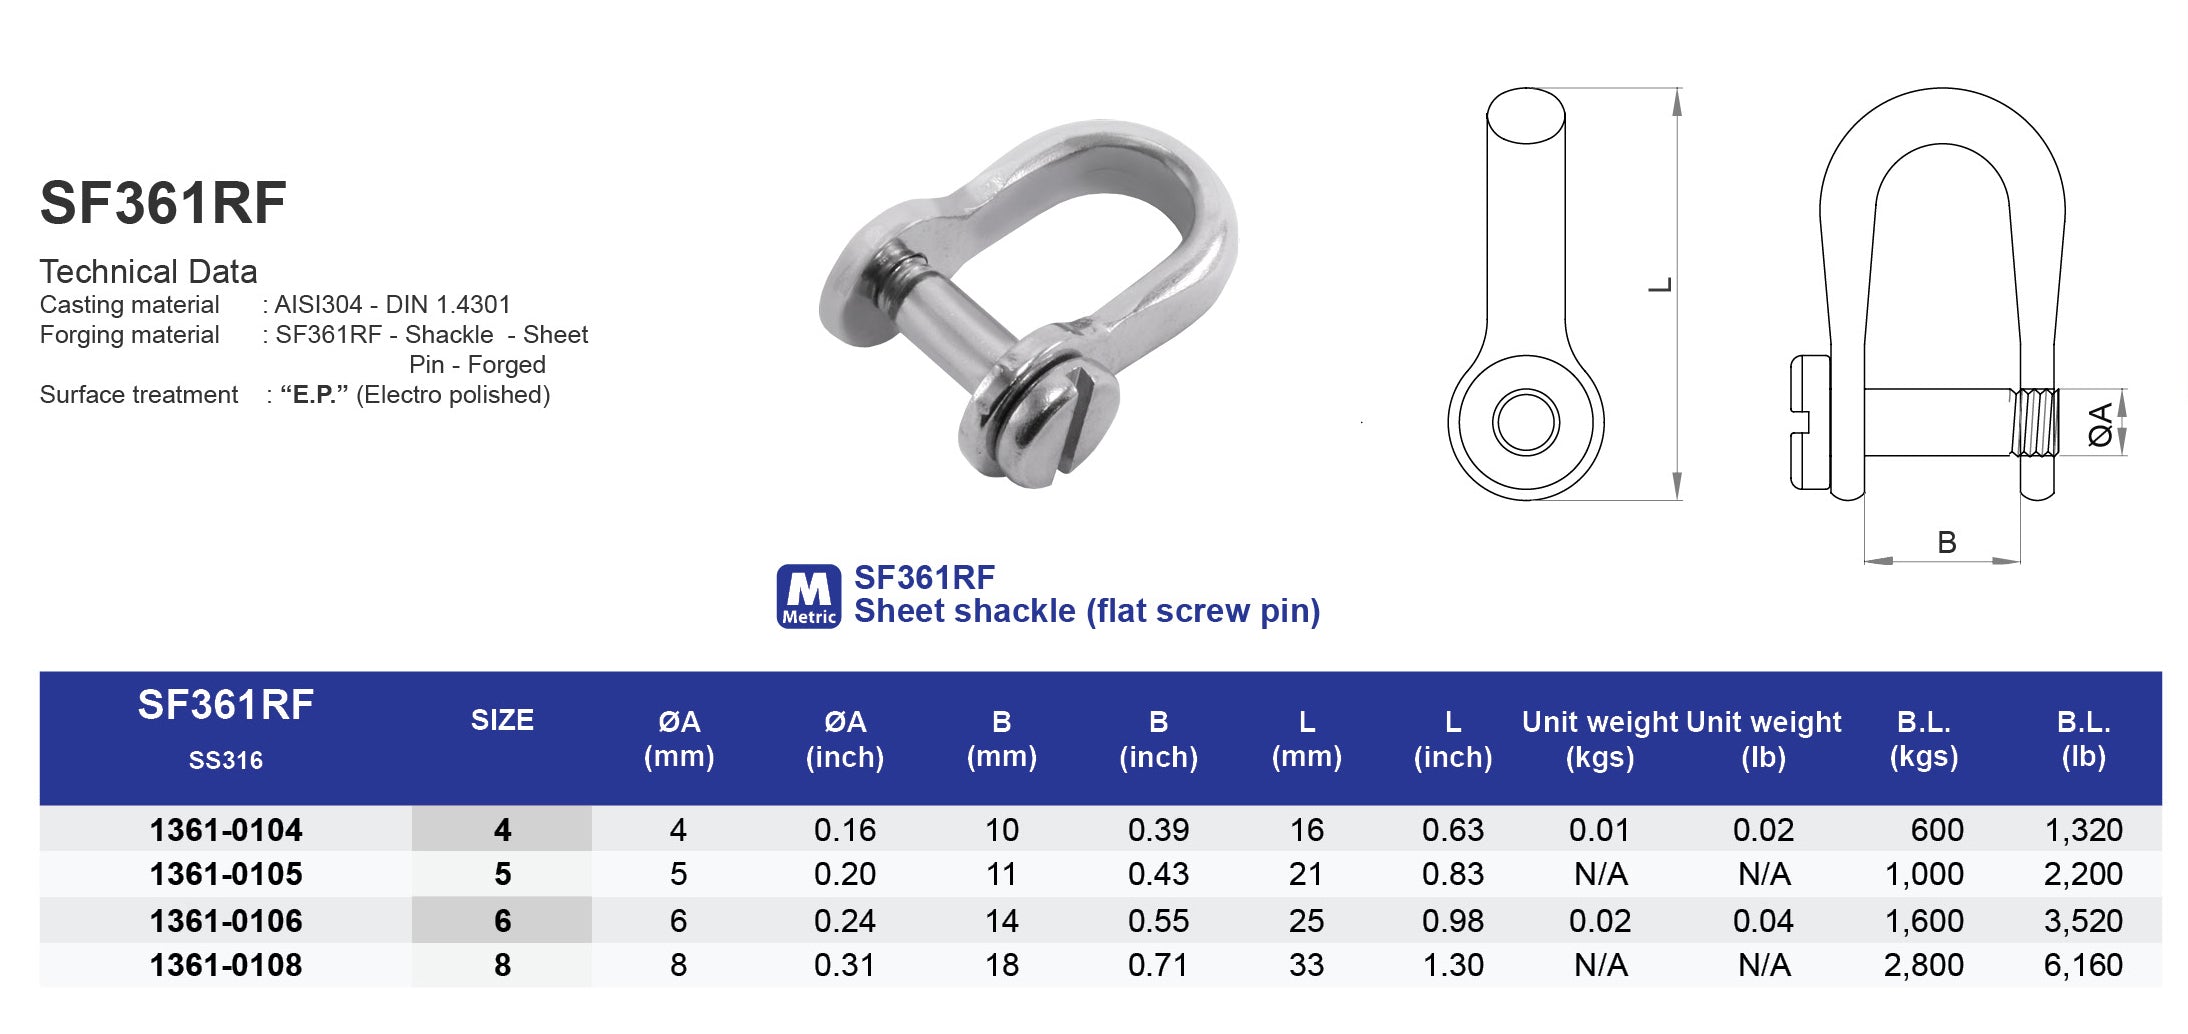 SF361RF Sheet shackle (flat screw pin) - 304